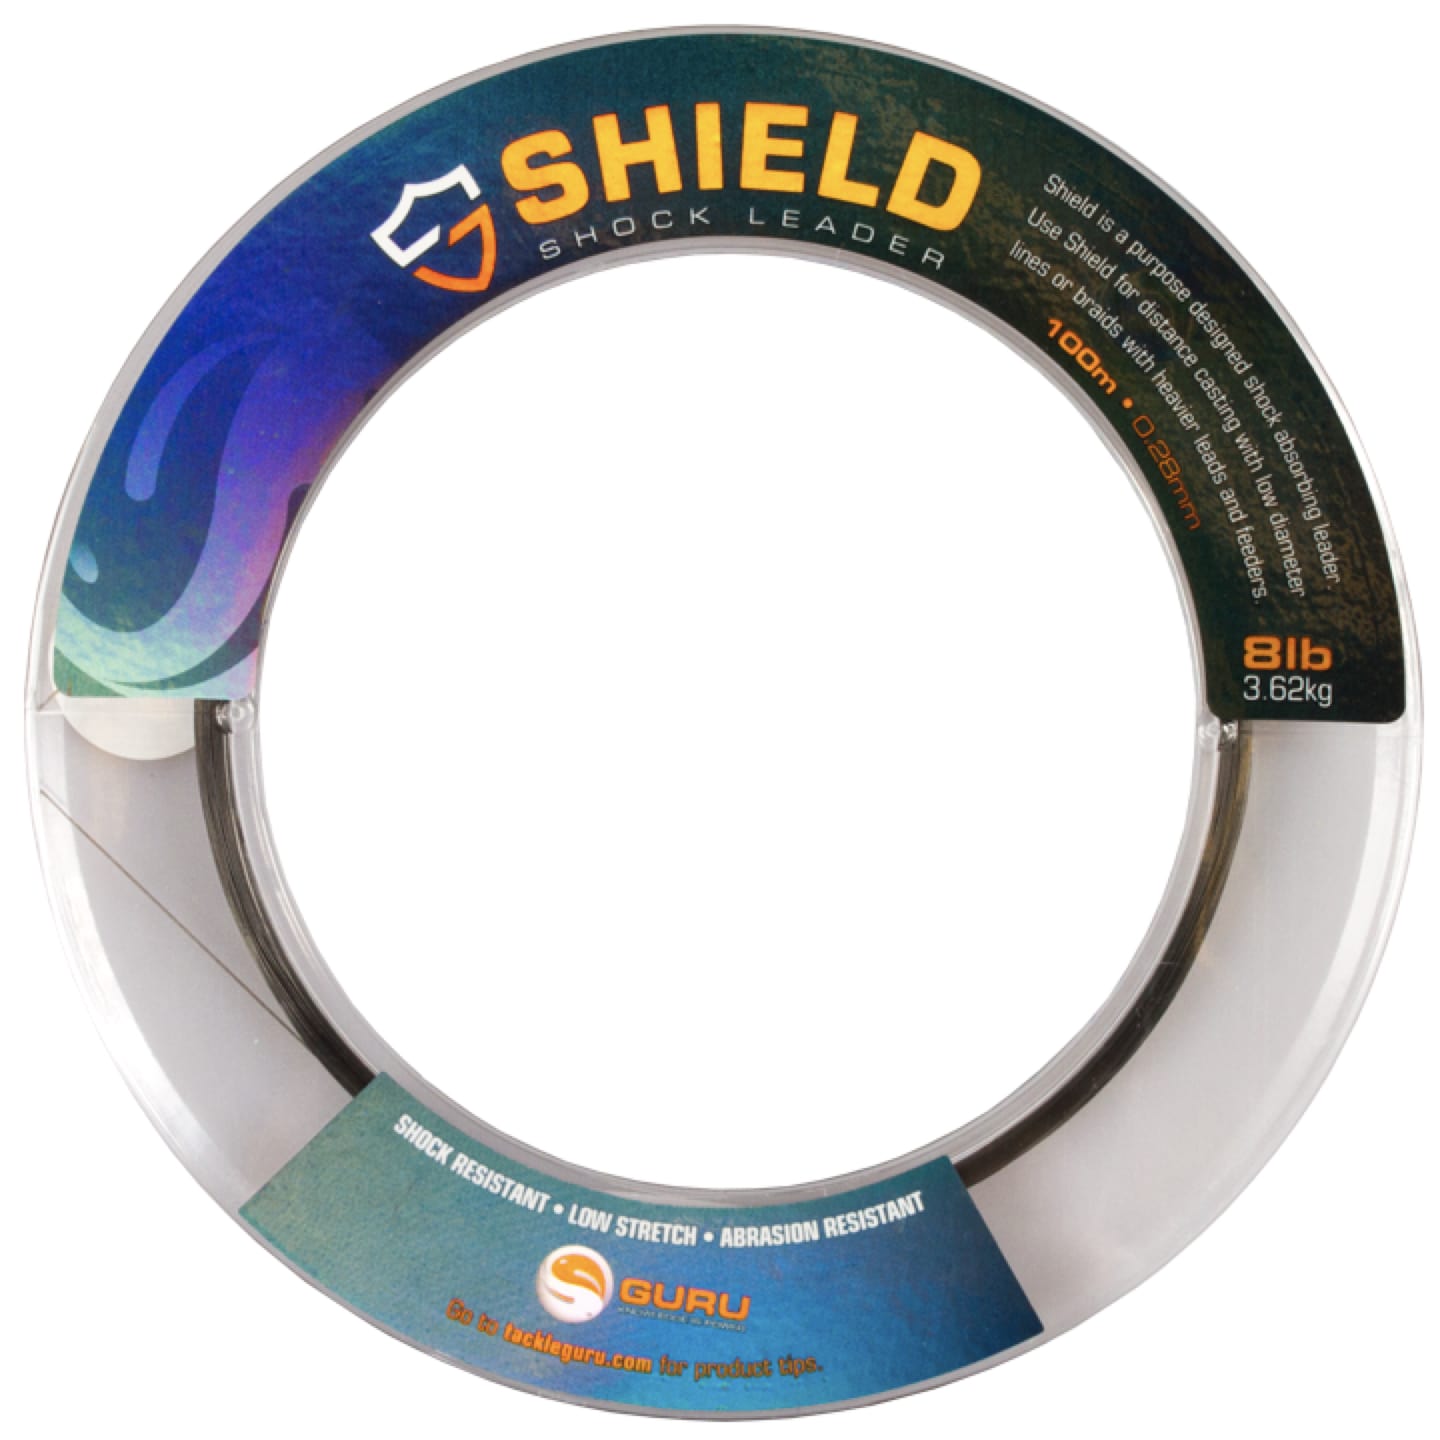 Guru Shield Shockleader 100m Nylon 8lb 0.28mm GSSL1